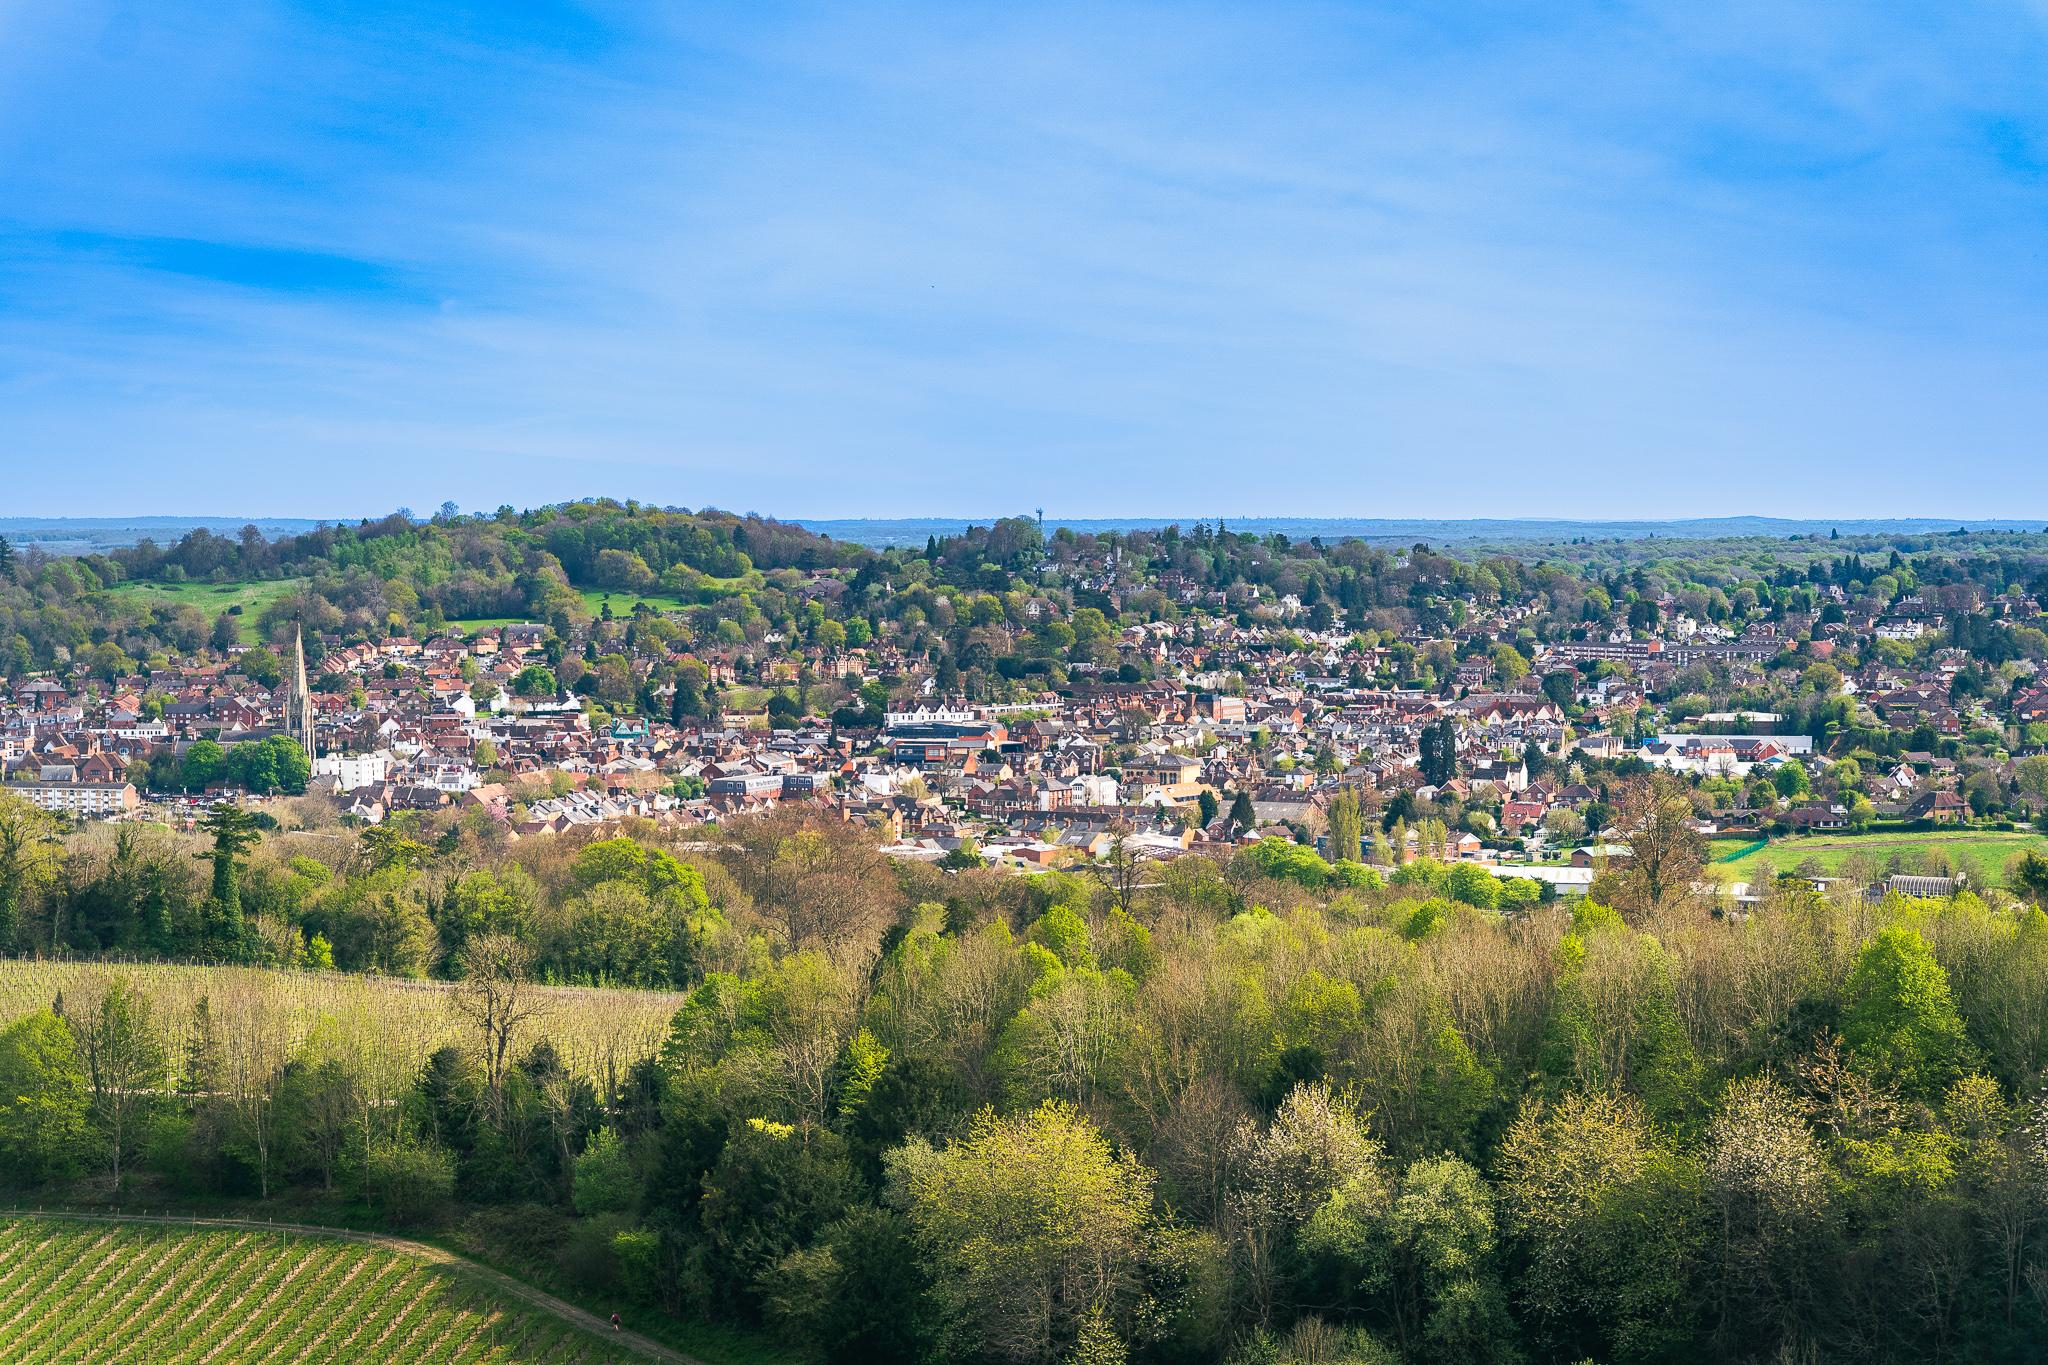 A view over Dorking, Surrey, UK - Captured from Green Terrace above Denbies Wine Estate